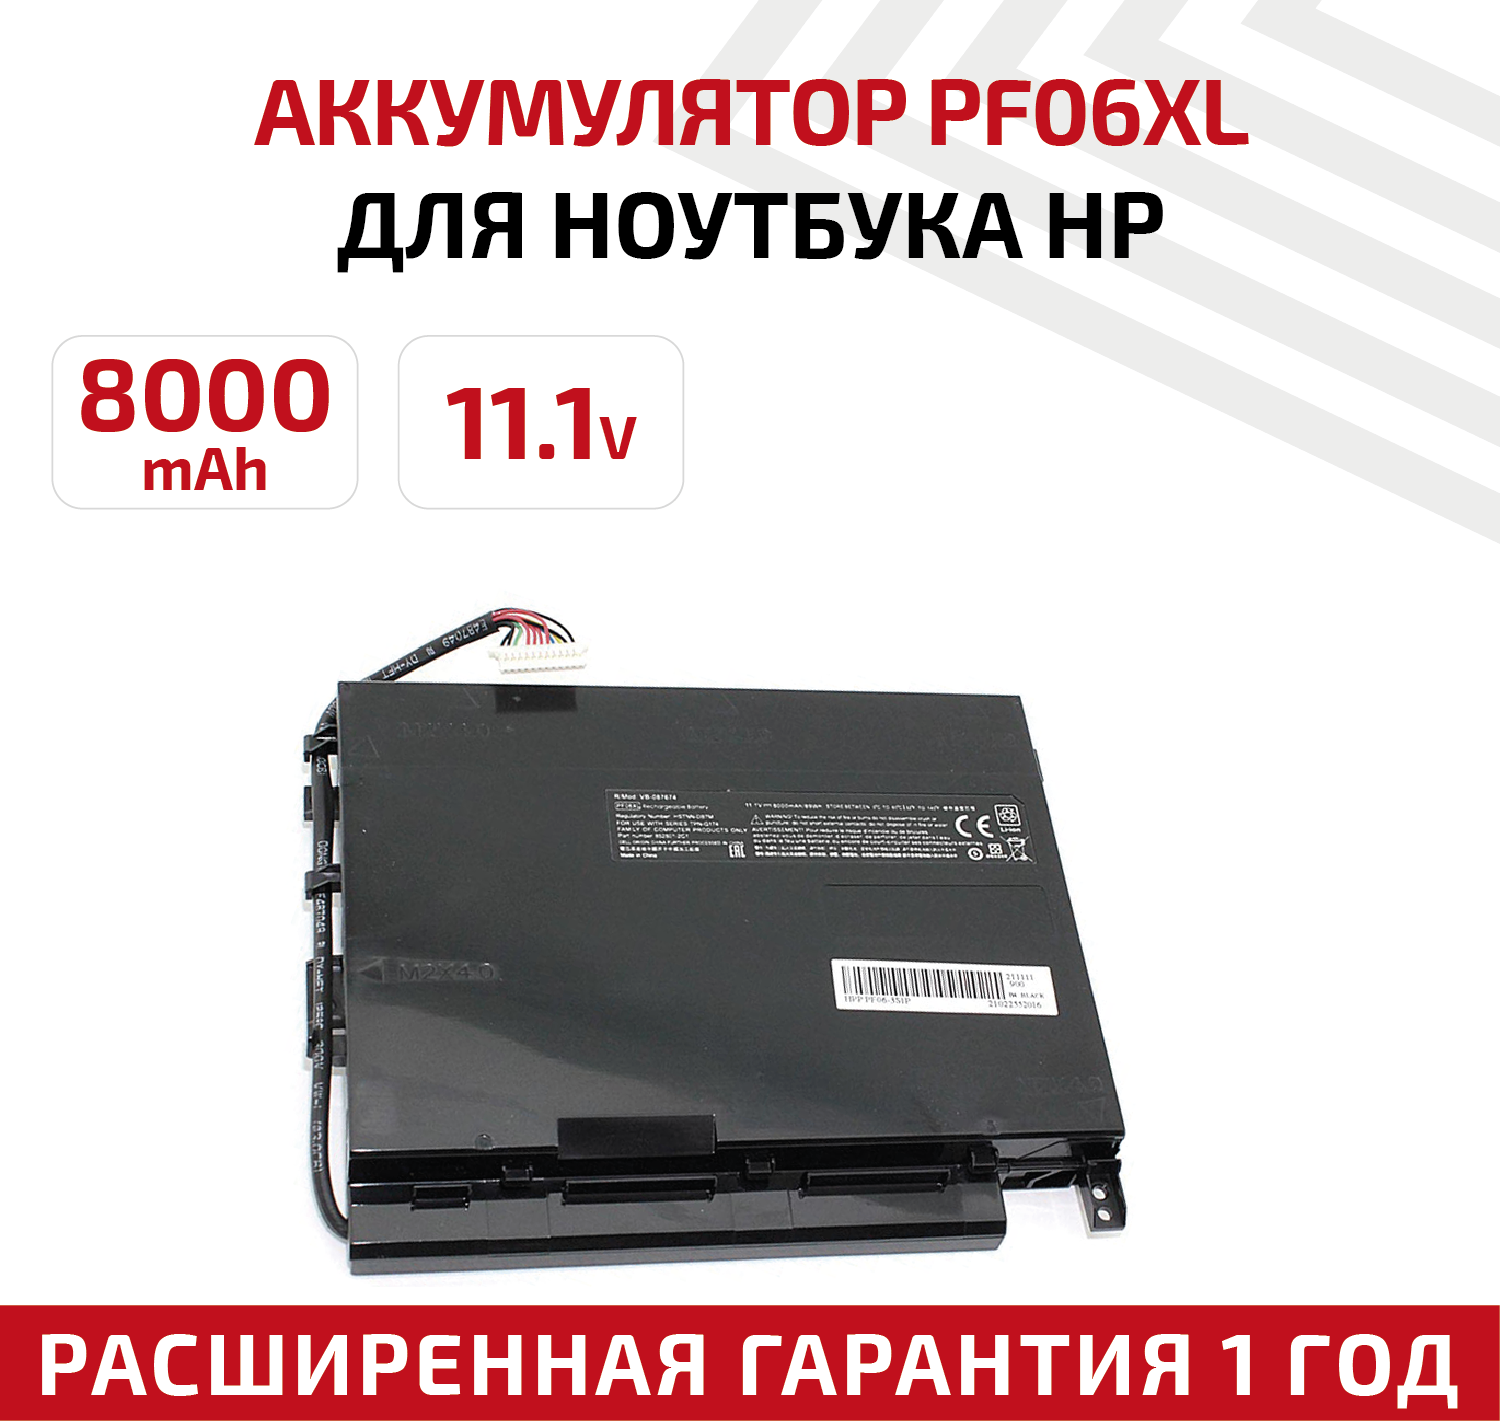 Аккумулятор (АКБ, аккумуляторная батарея) PF06XL для ноутбука HP Omen 17-w119TX, 11.1В, 8000мАч